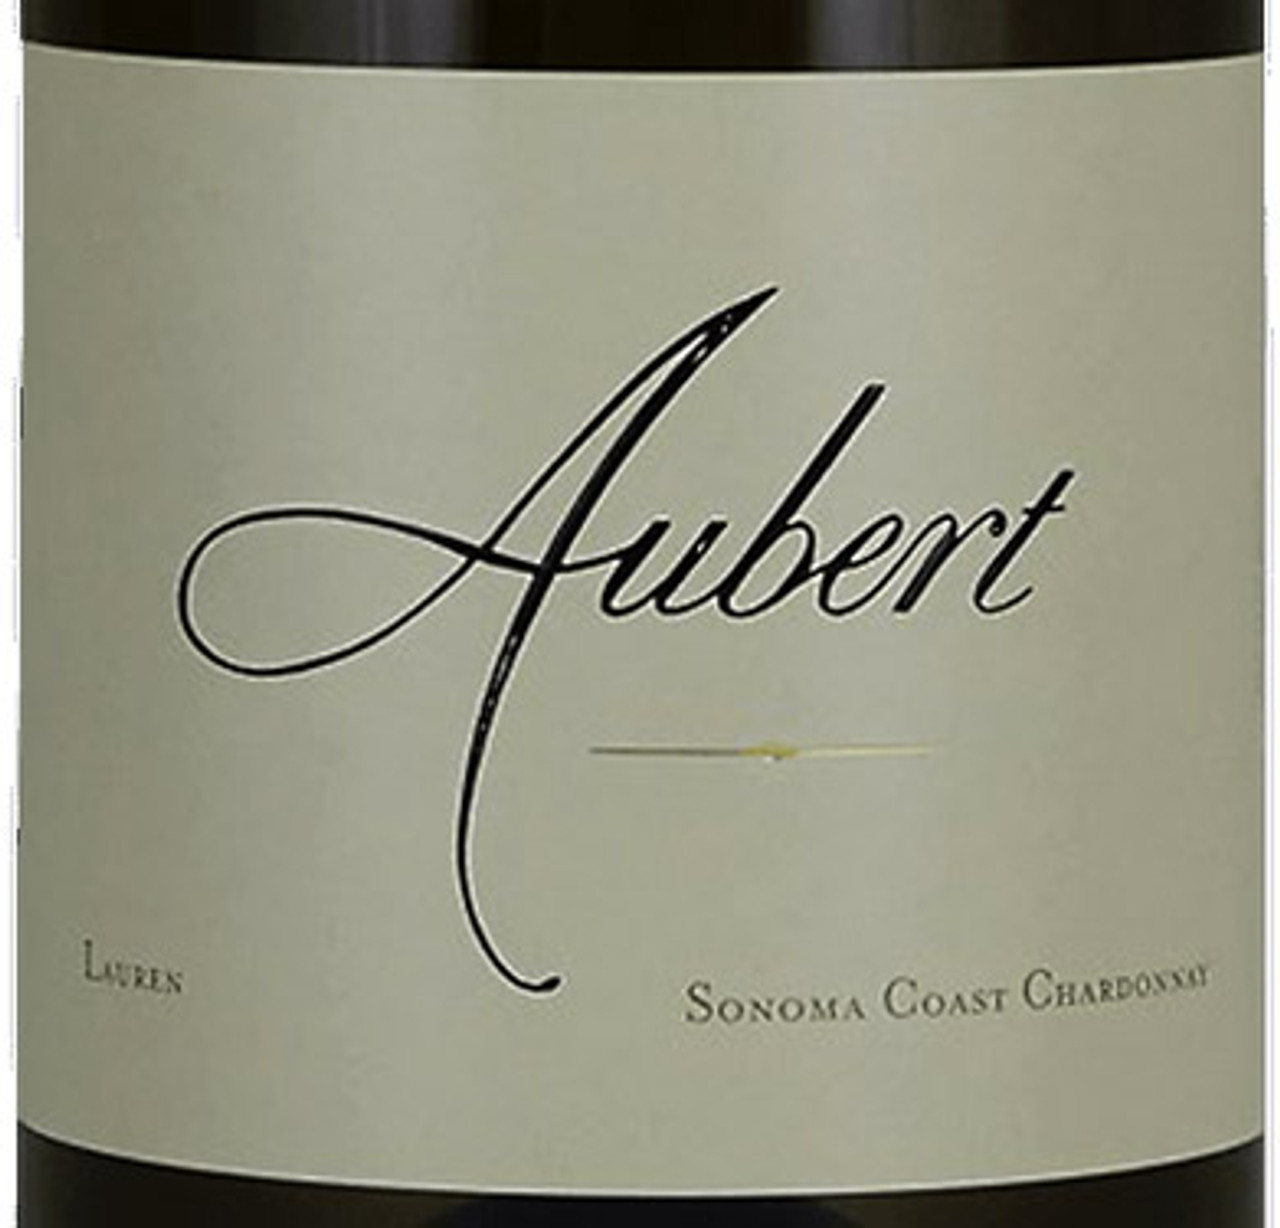 2016 Aubert Chardonnay Lauren - click image for full description